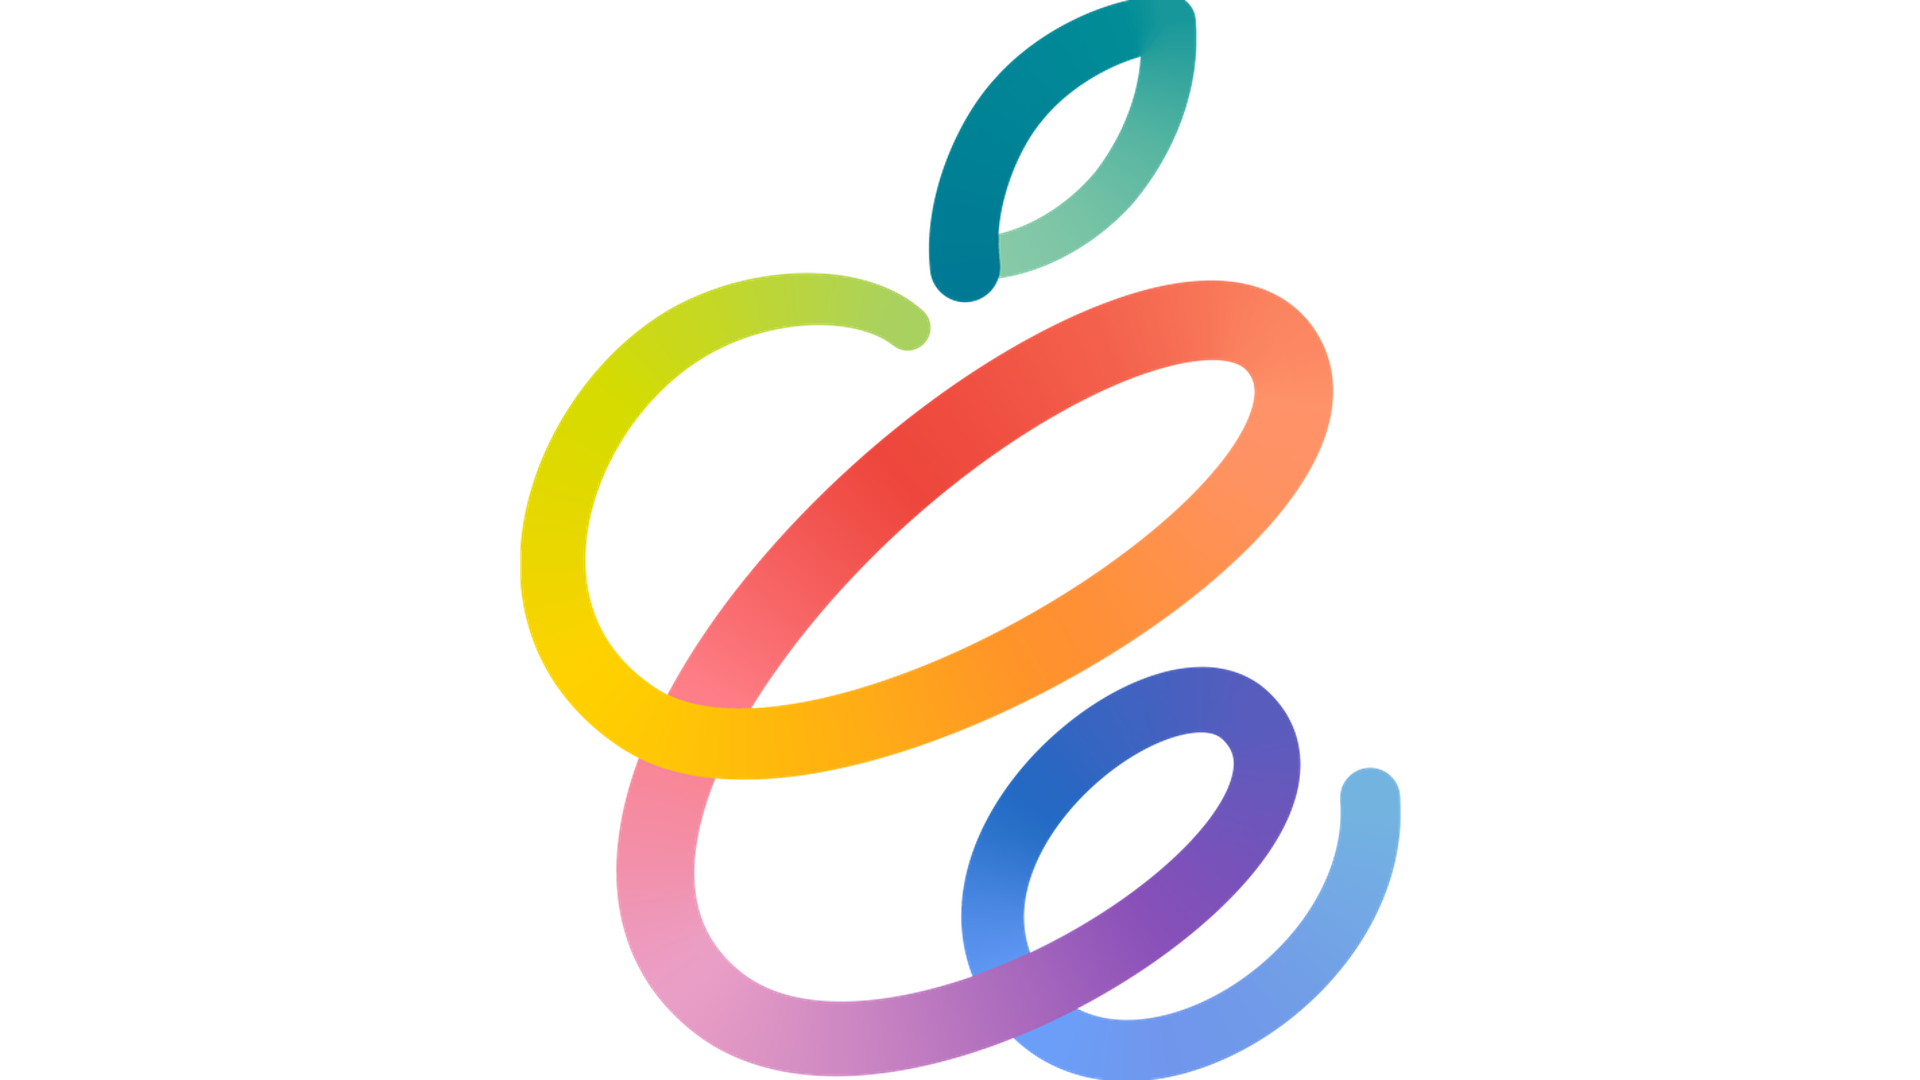 Apple's invite logo